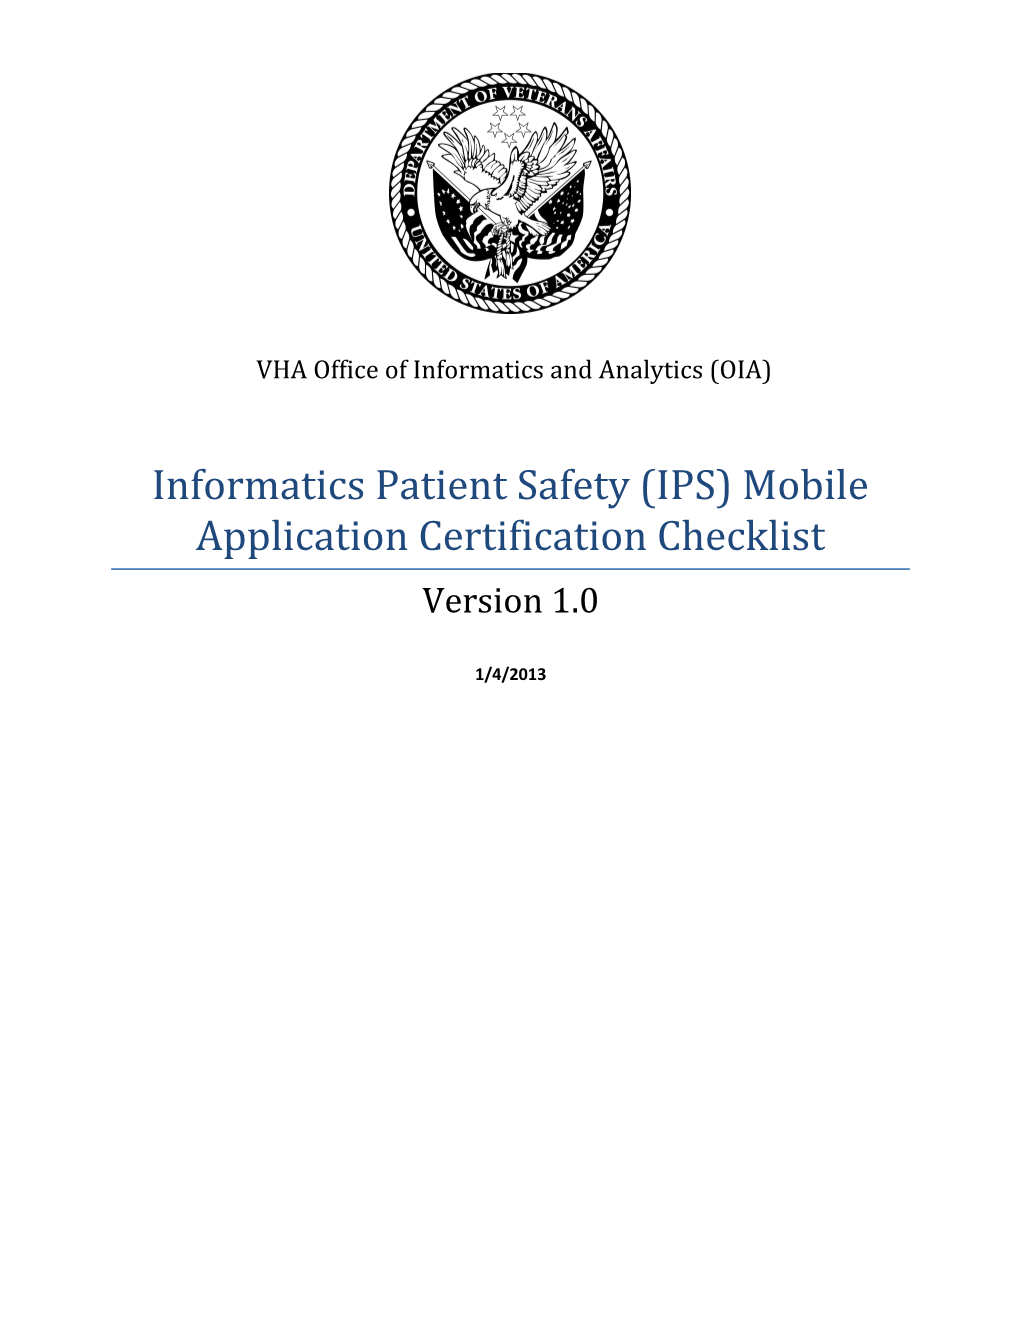 Informatics Patient Safety (IPS) Mobile Application Certification Checklist